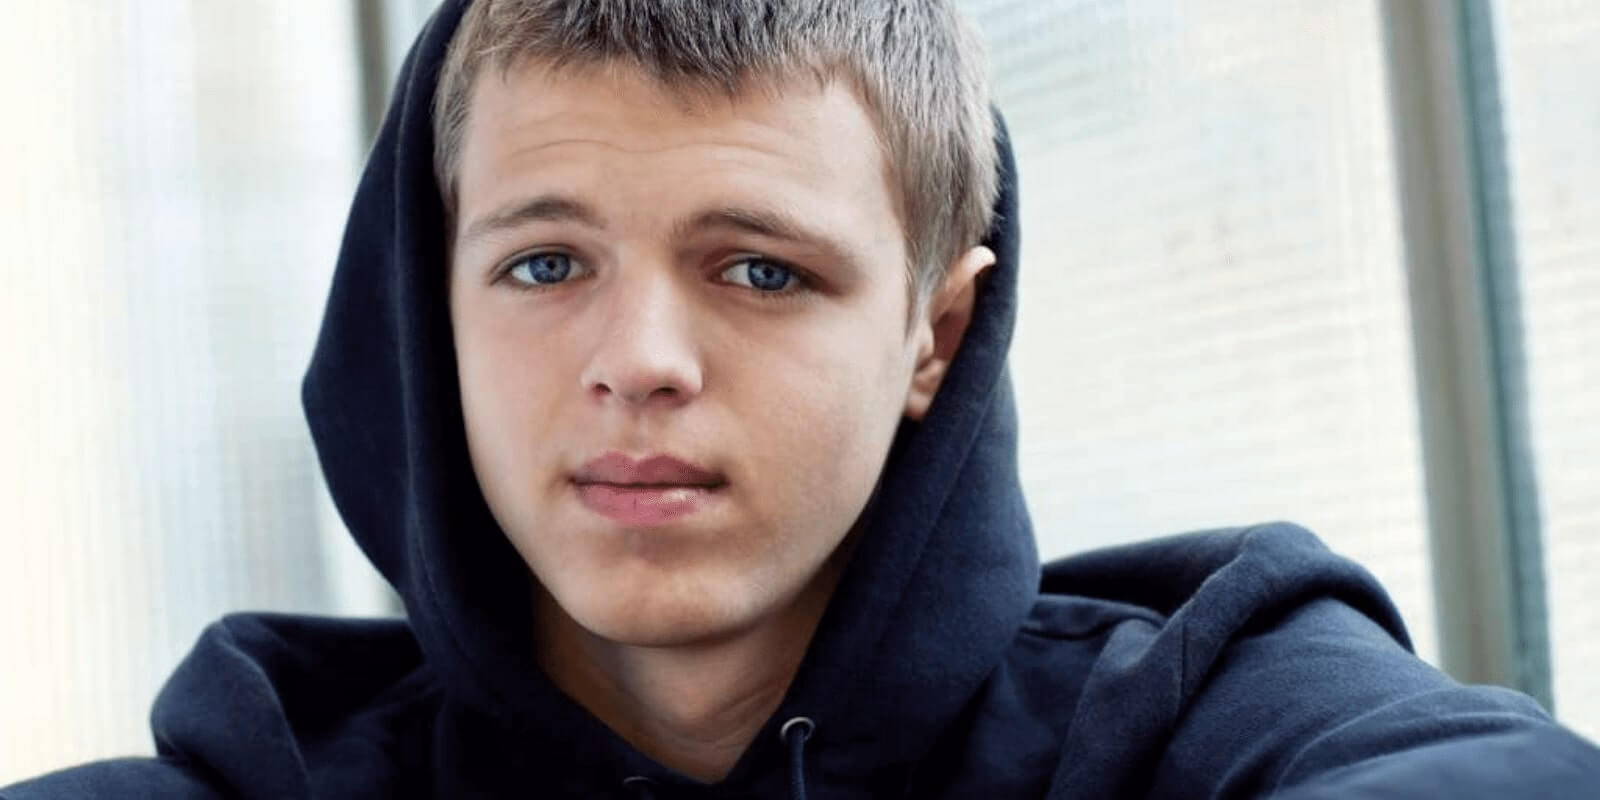 Teen boy wearing a hoody staring at the camera